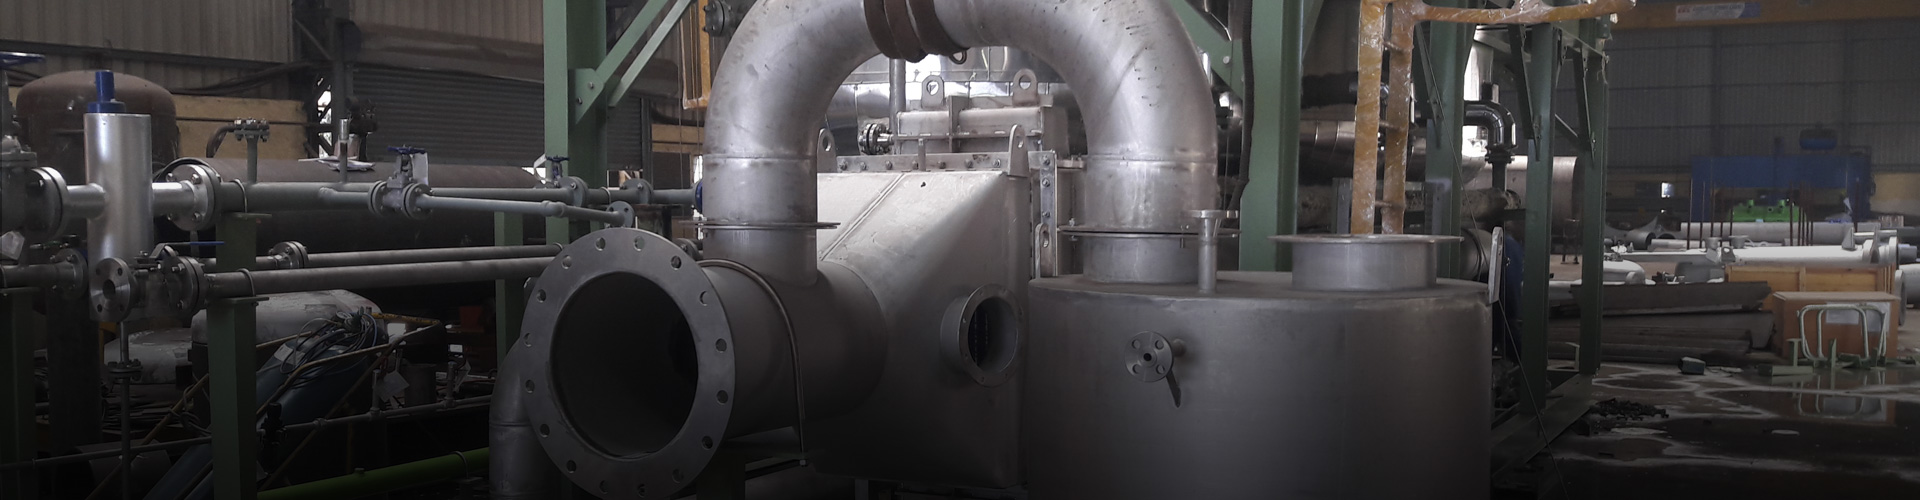 National Board of Boilers Certified Water Drums Suppliers